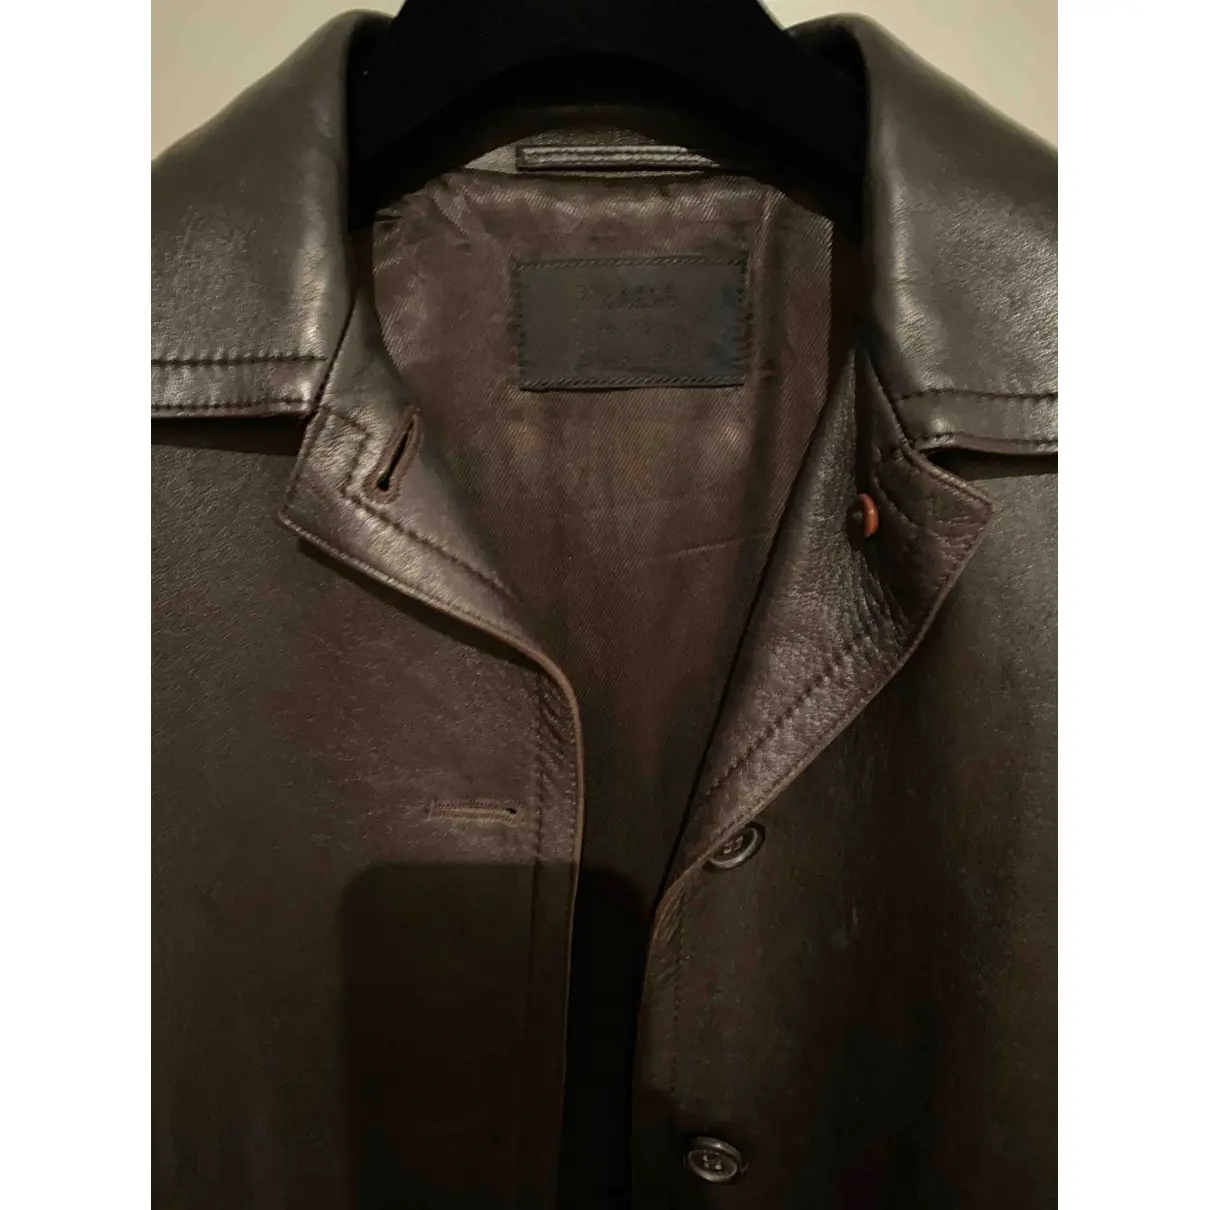 Buy Prada Leather biker jacket online